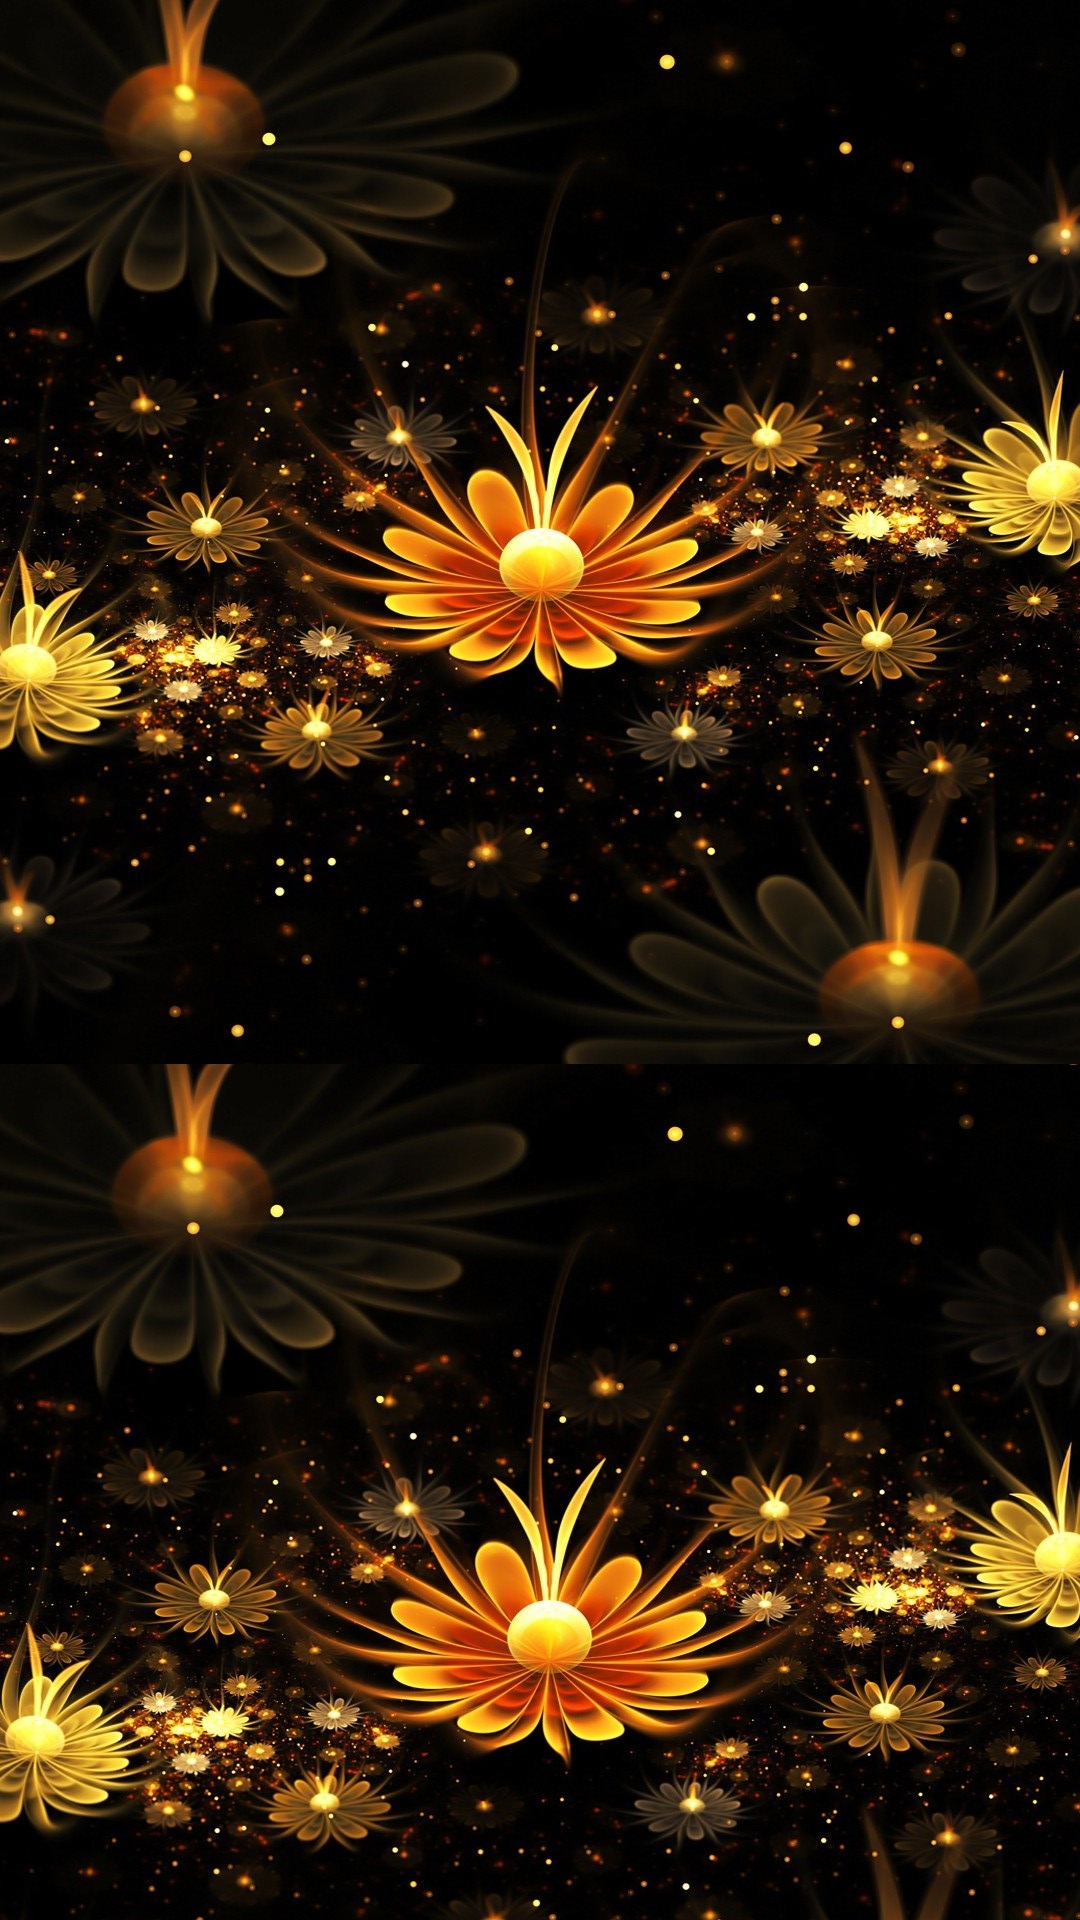 3D Flower Wallpaper For iPhone resolution 1080x1920